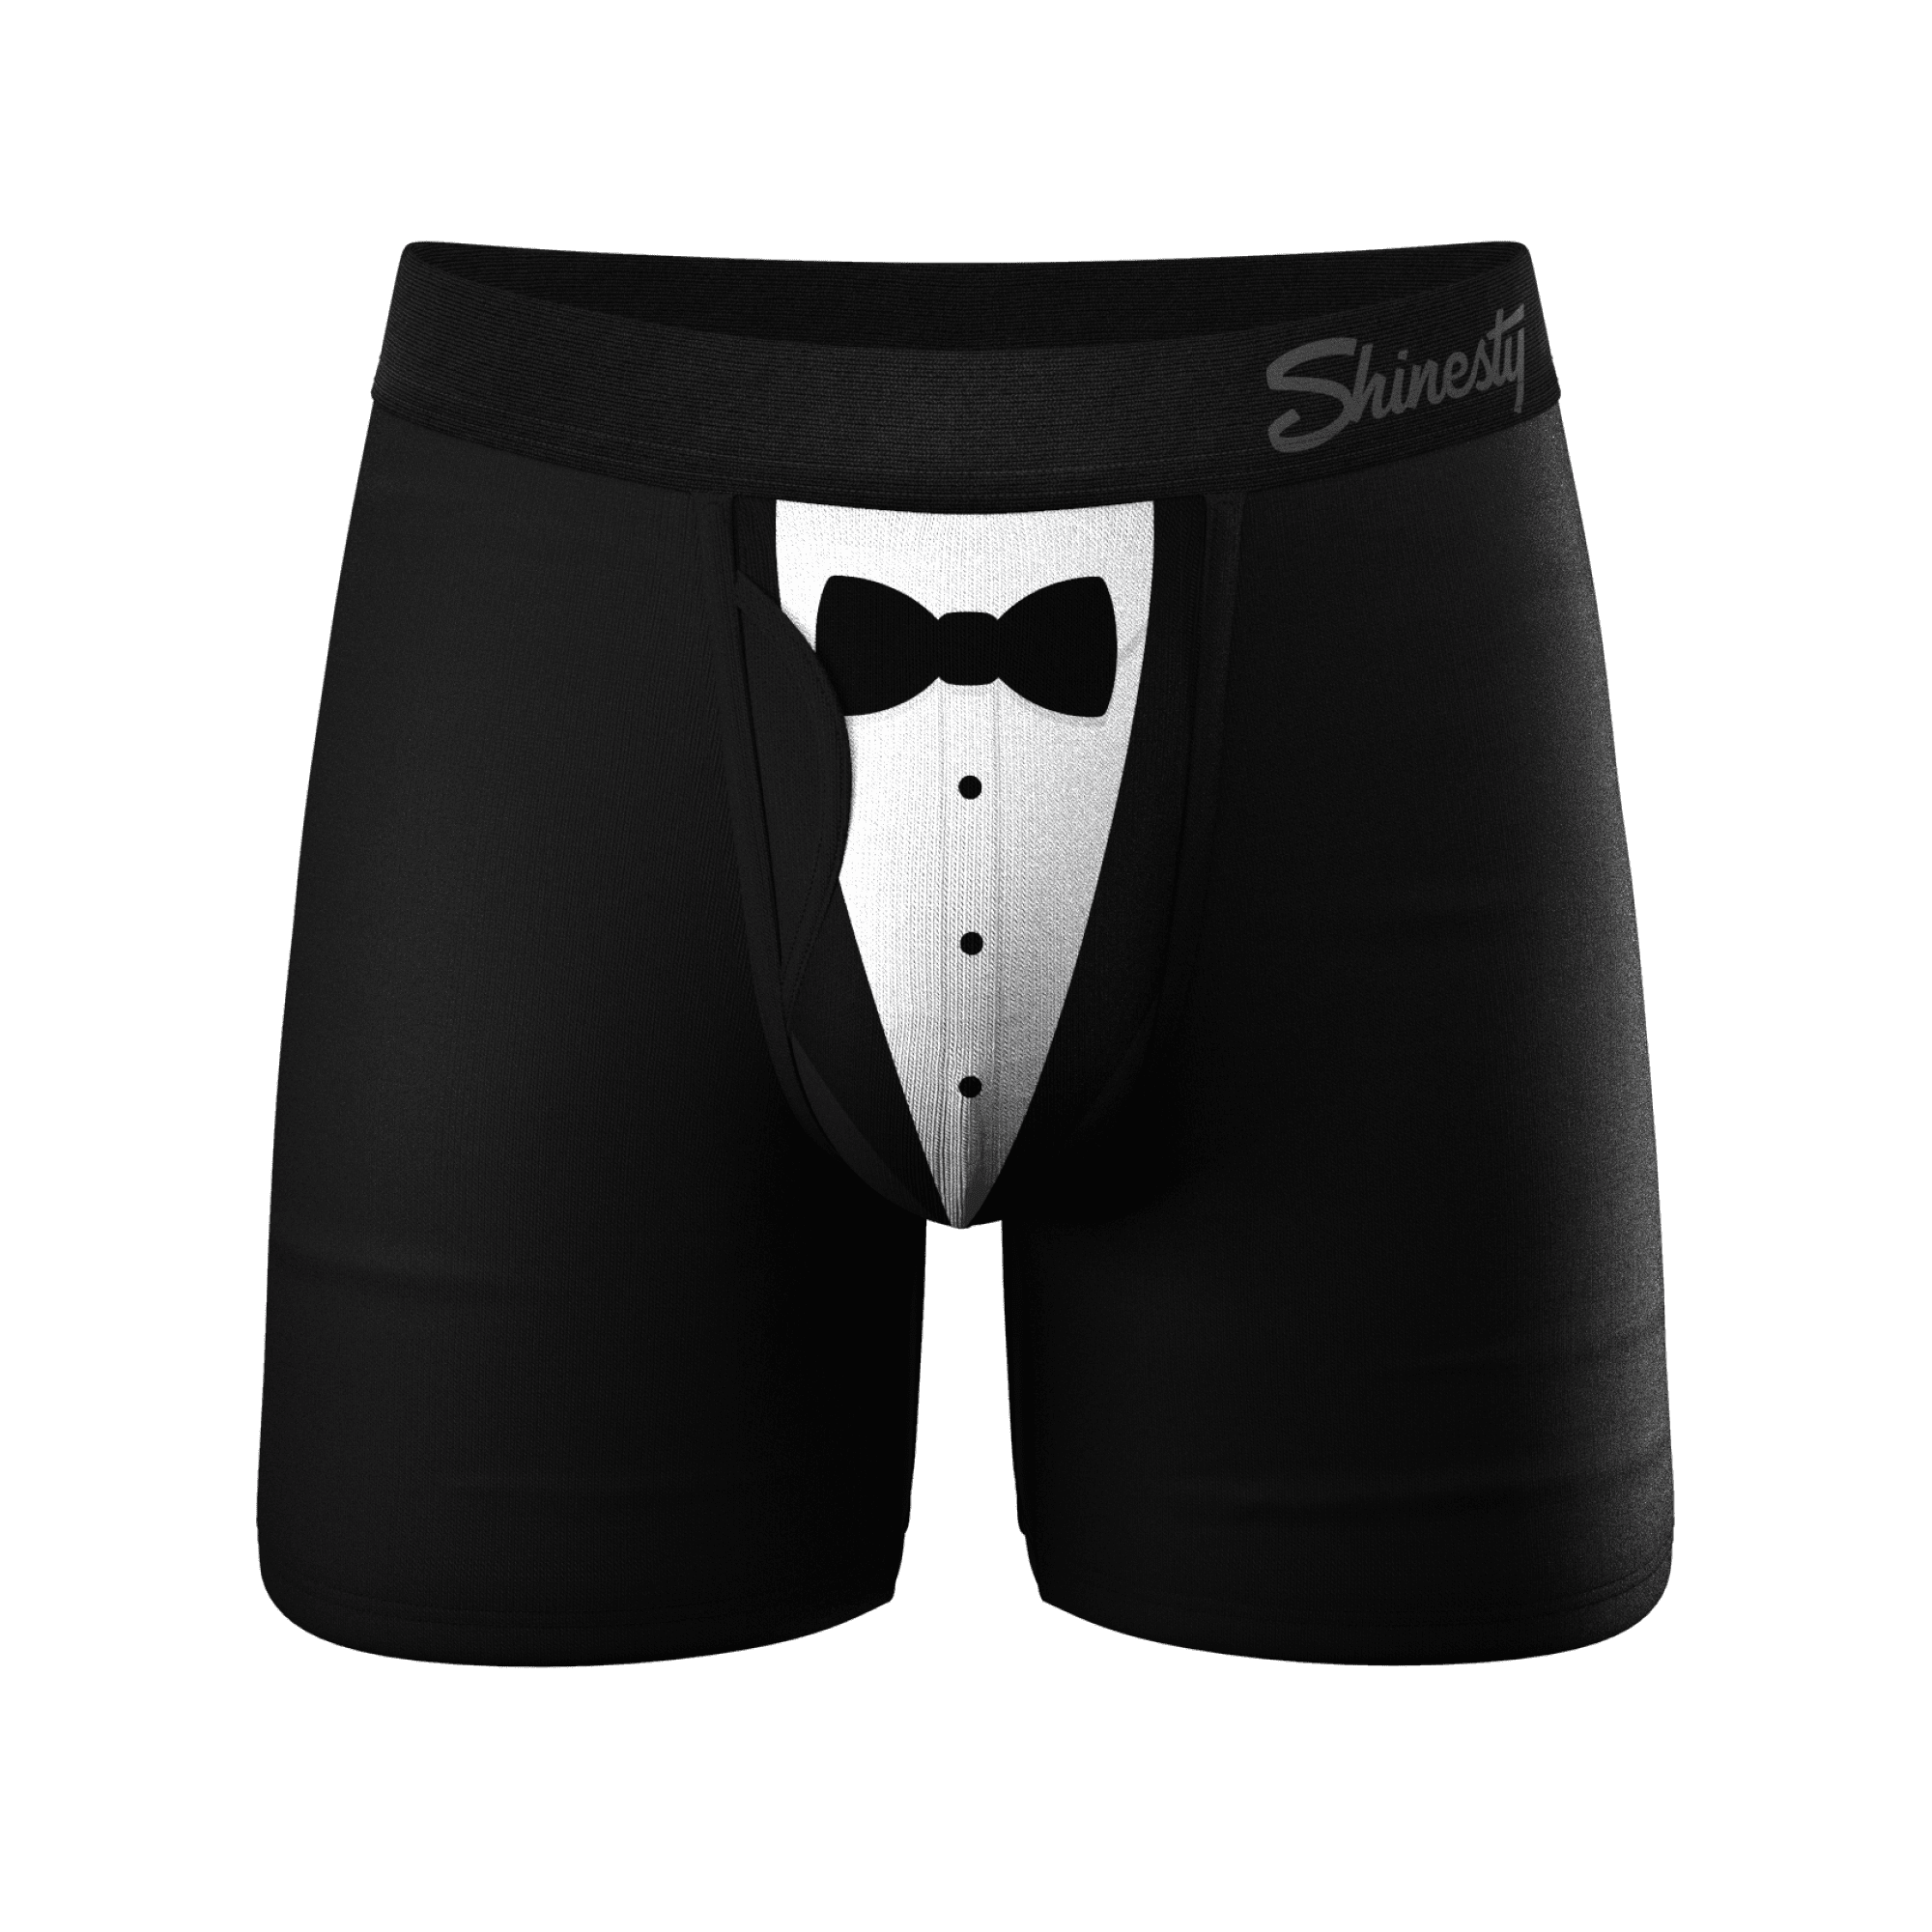  Hammock Support Pouch Underwear For Men Big And Tall  Underwear For Men Flyless US 3X Tuxedo